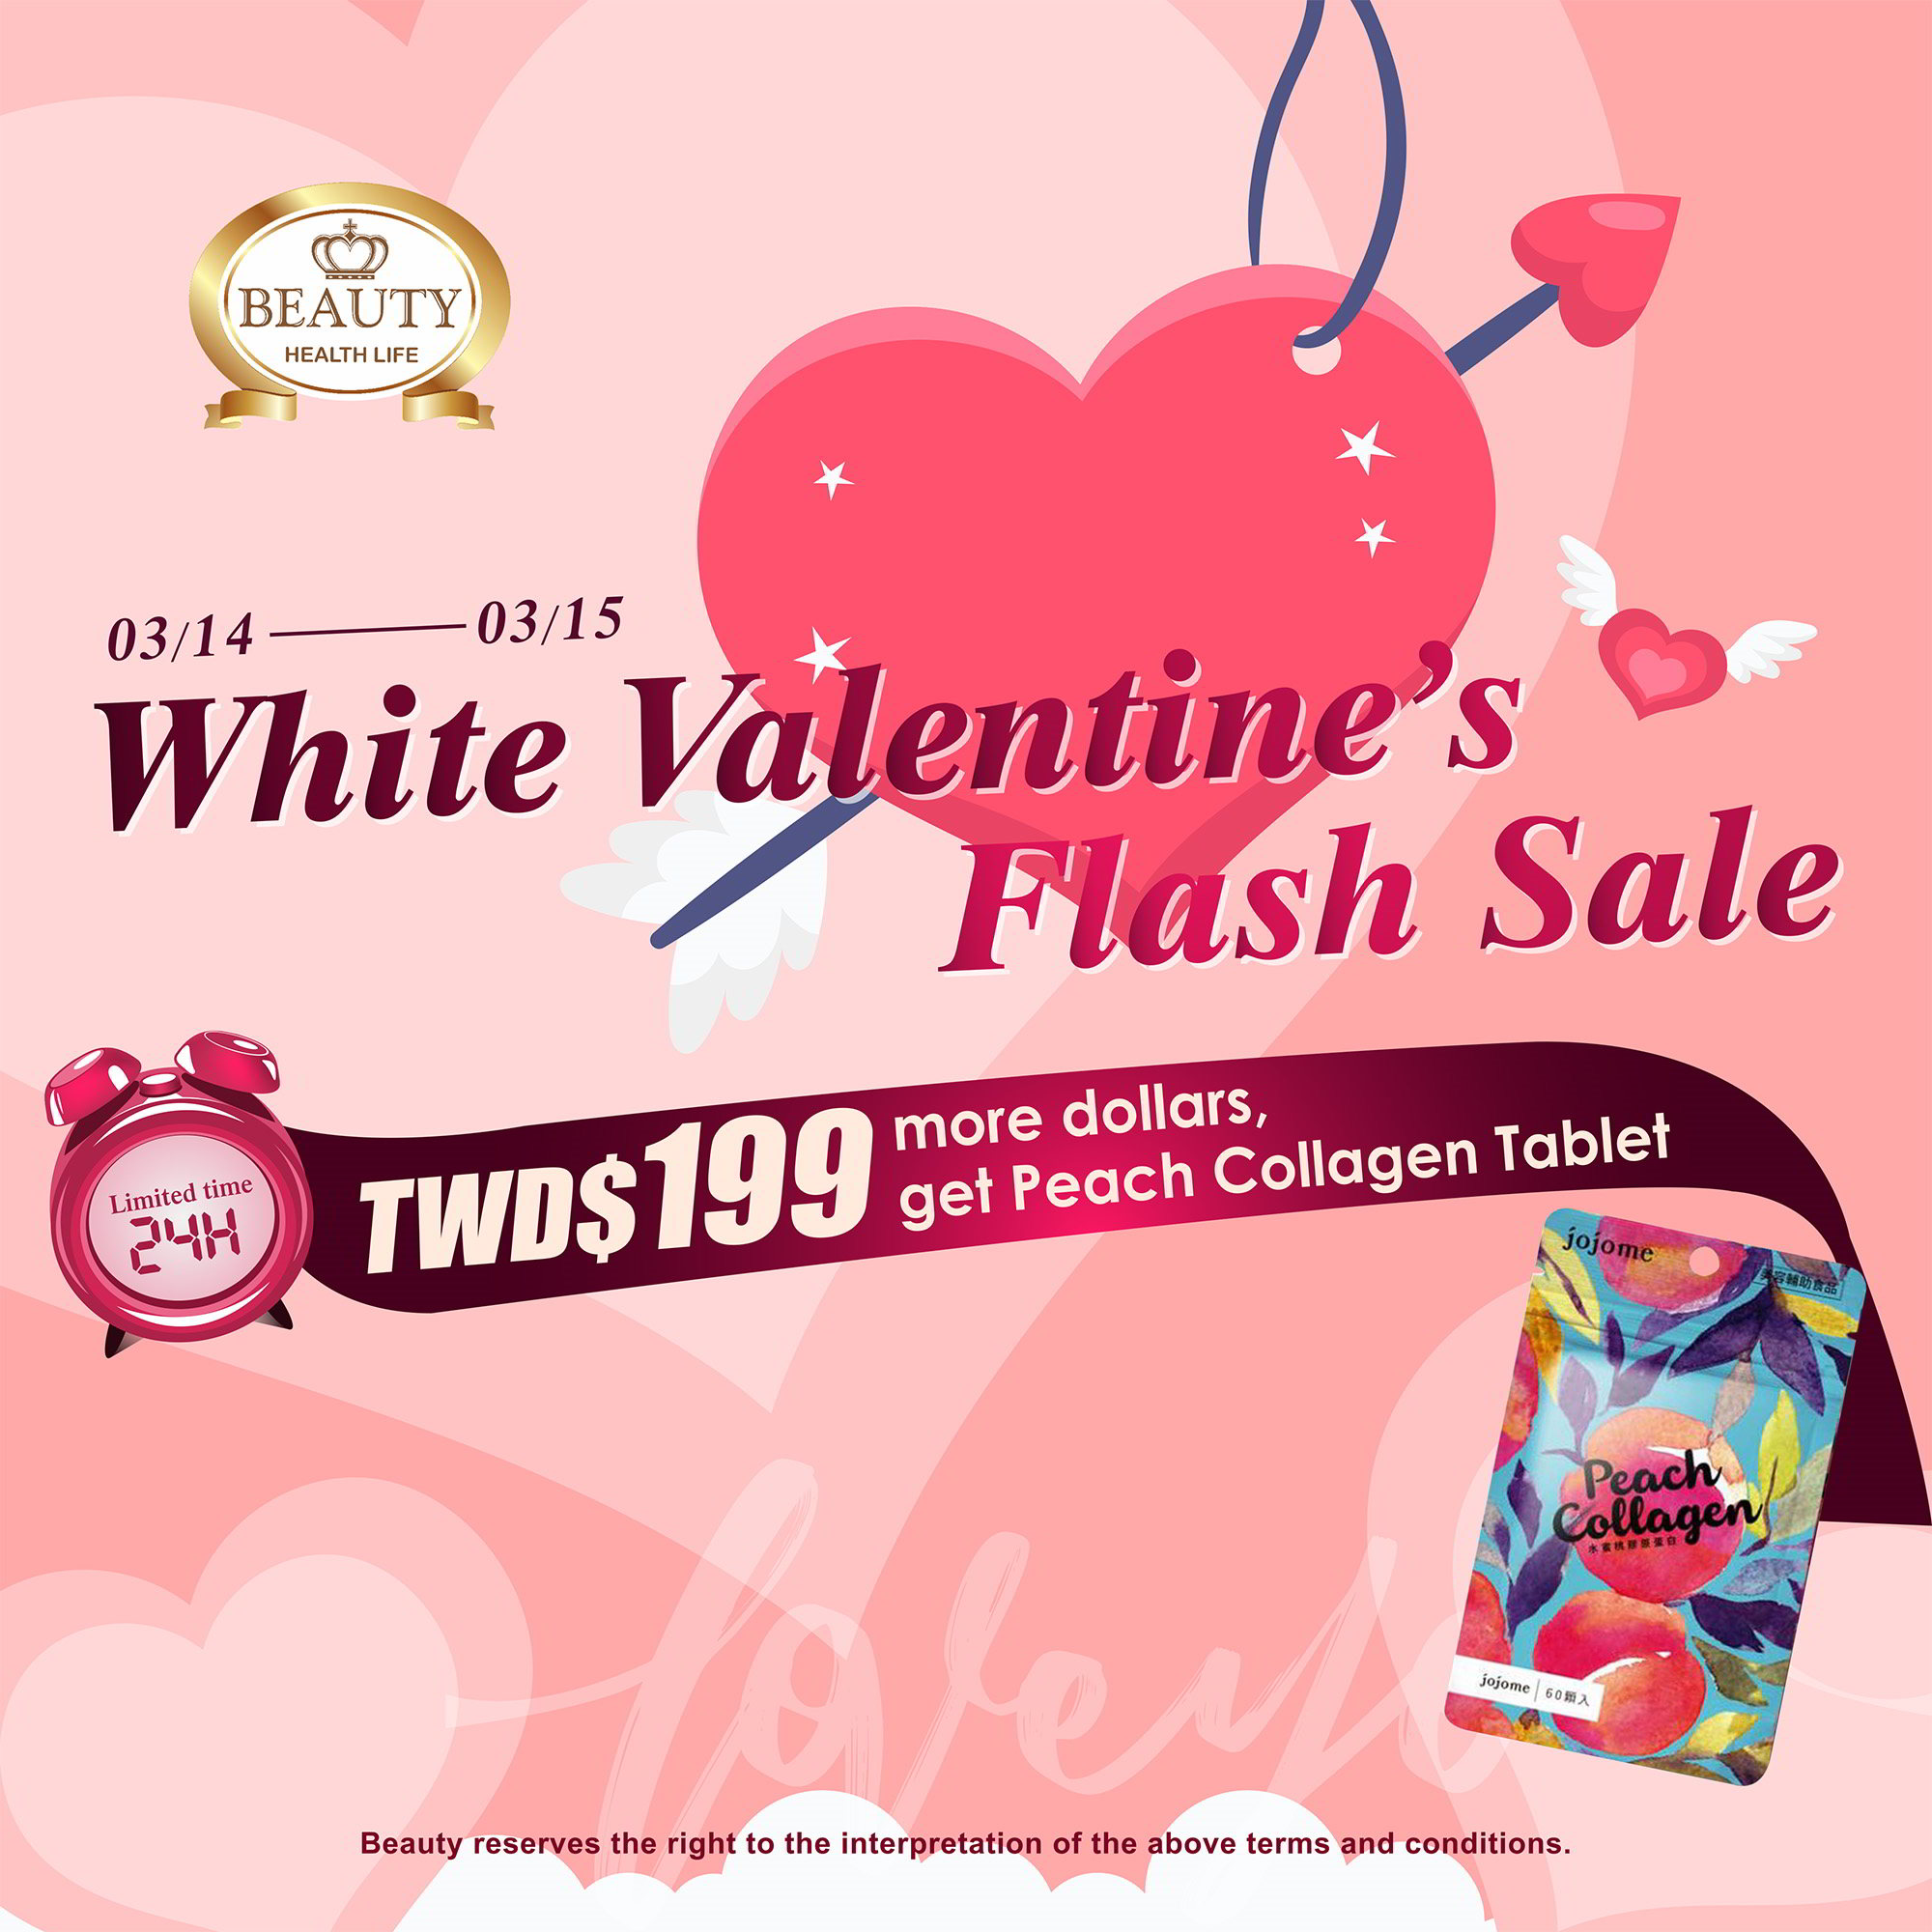 White Valentine’s Flash Sale EDM.jpg